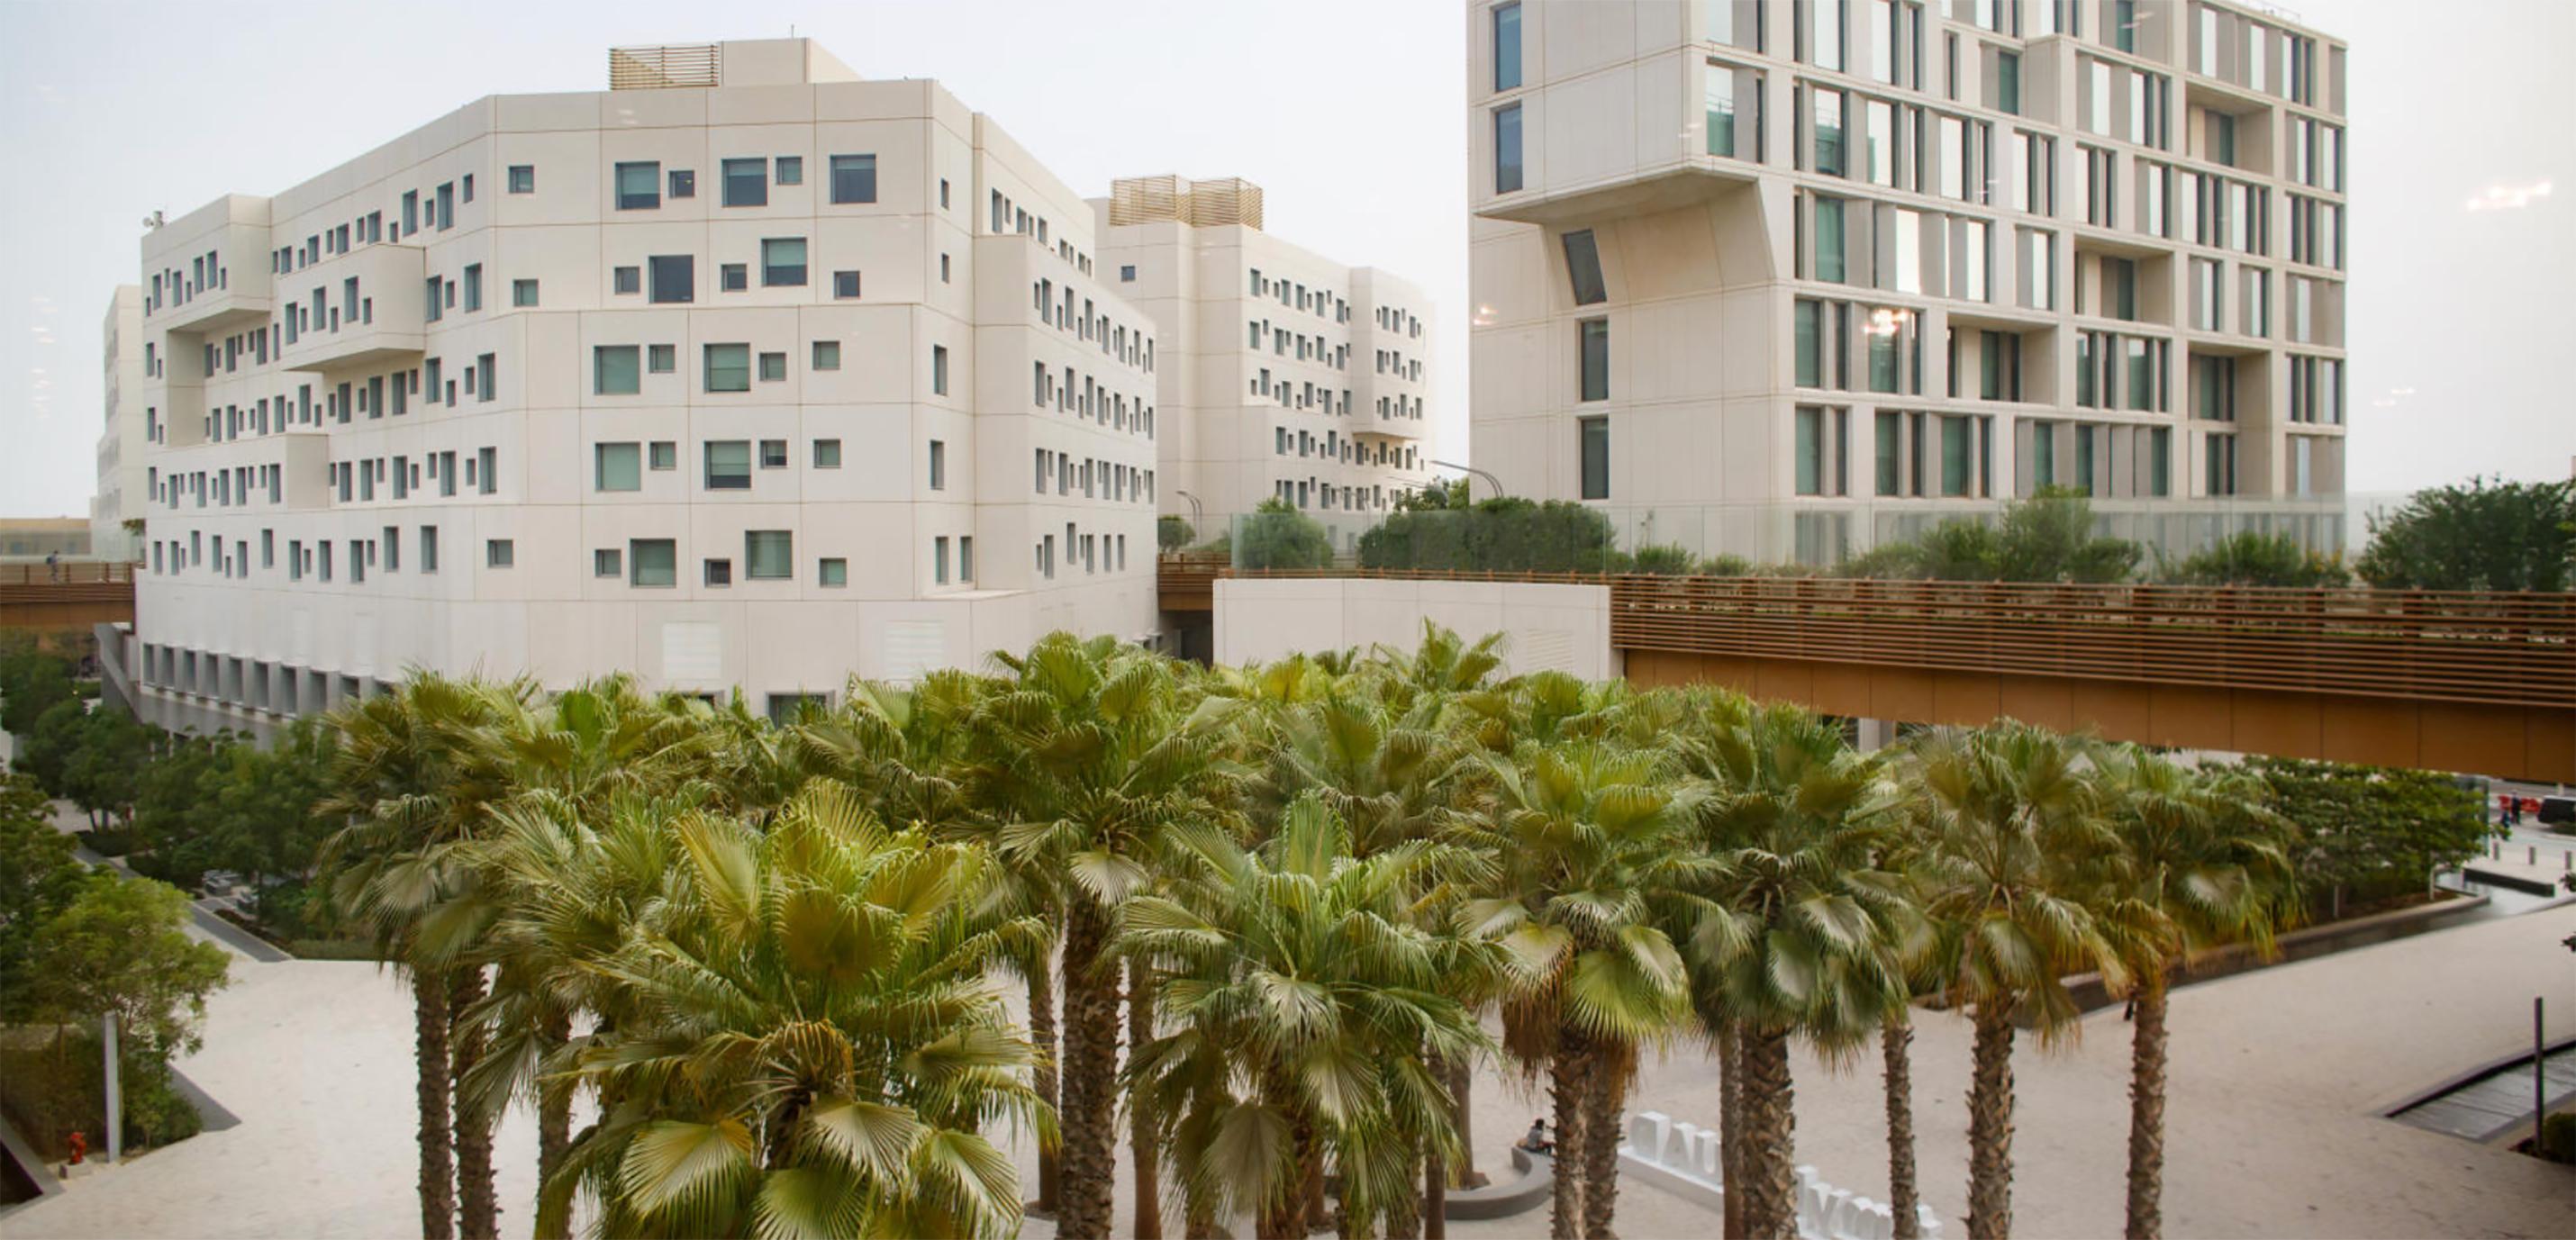 The NYU Abu Dhabi campus.